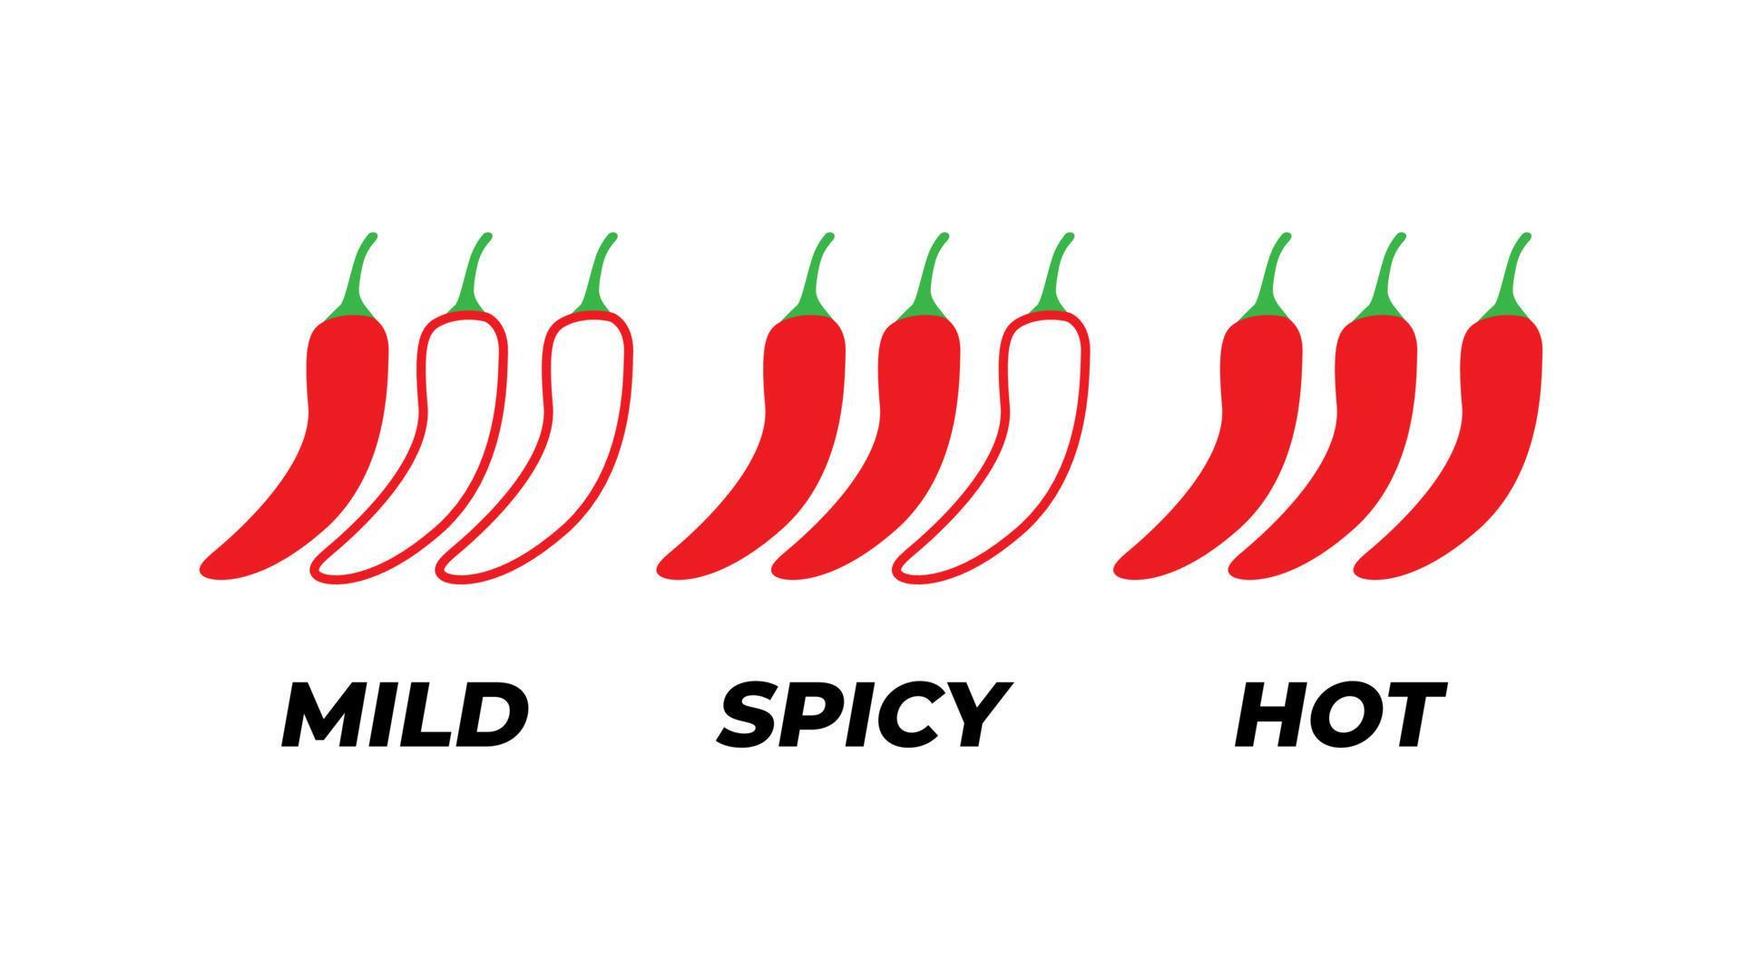 rode hete chili pittige niveau vector illustratrion